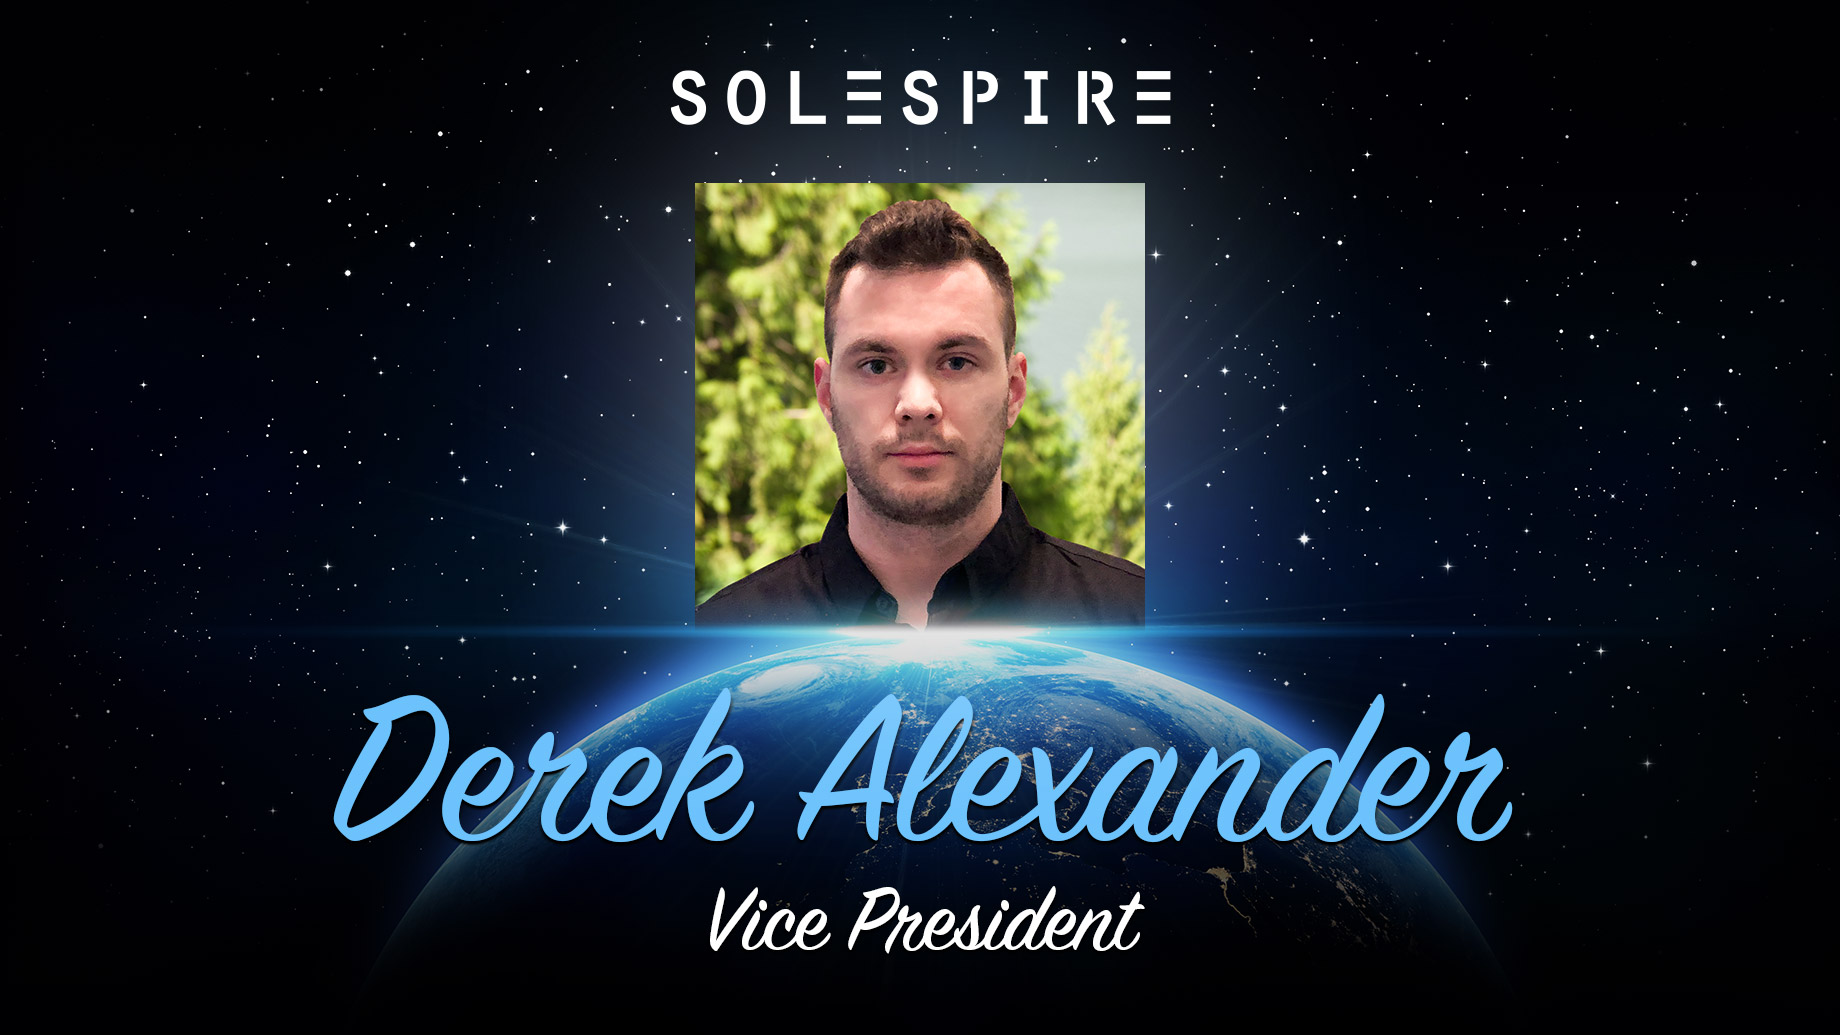 Derek Alexander - Solespire Vice President